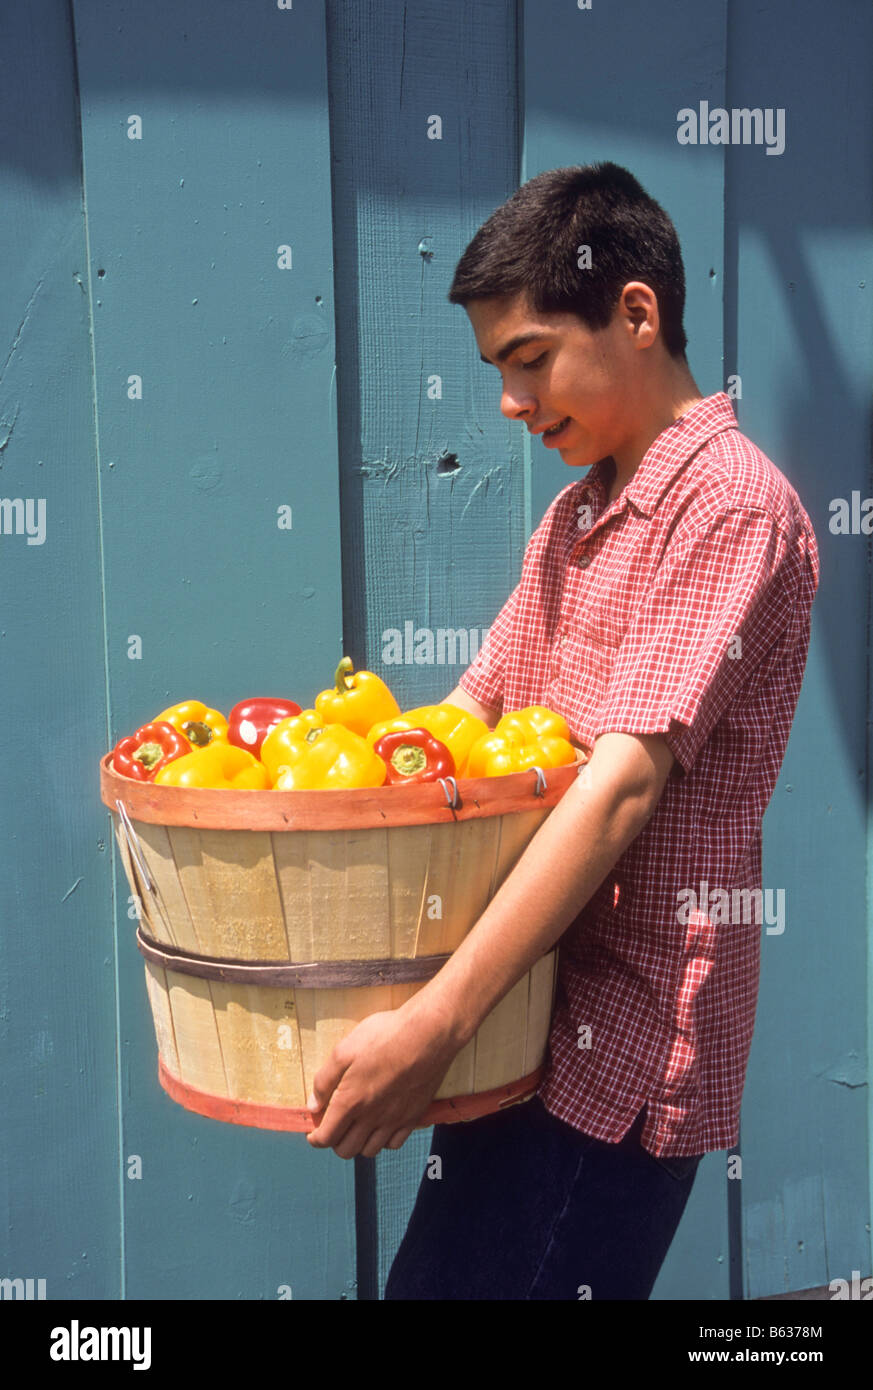 Hispanic boy carries bushel basket full of yellow bell peppers Stock Photo